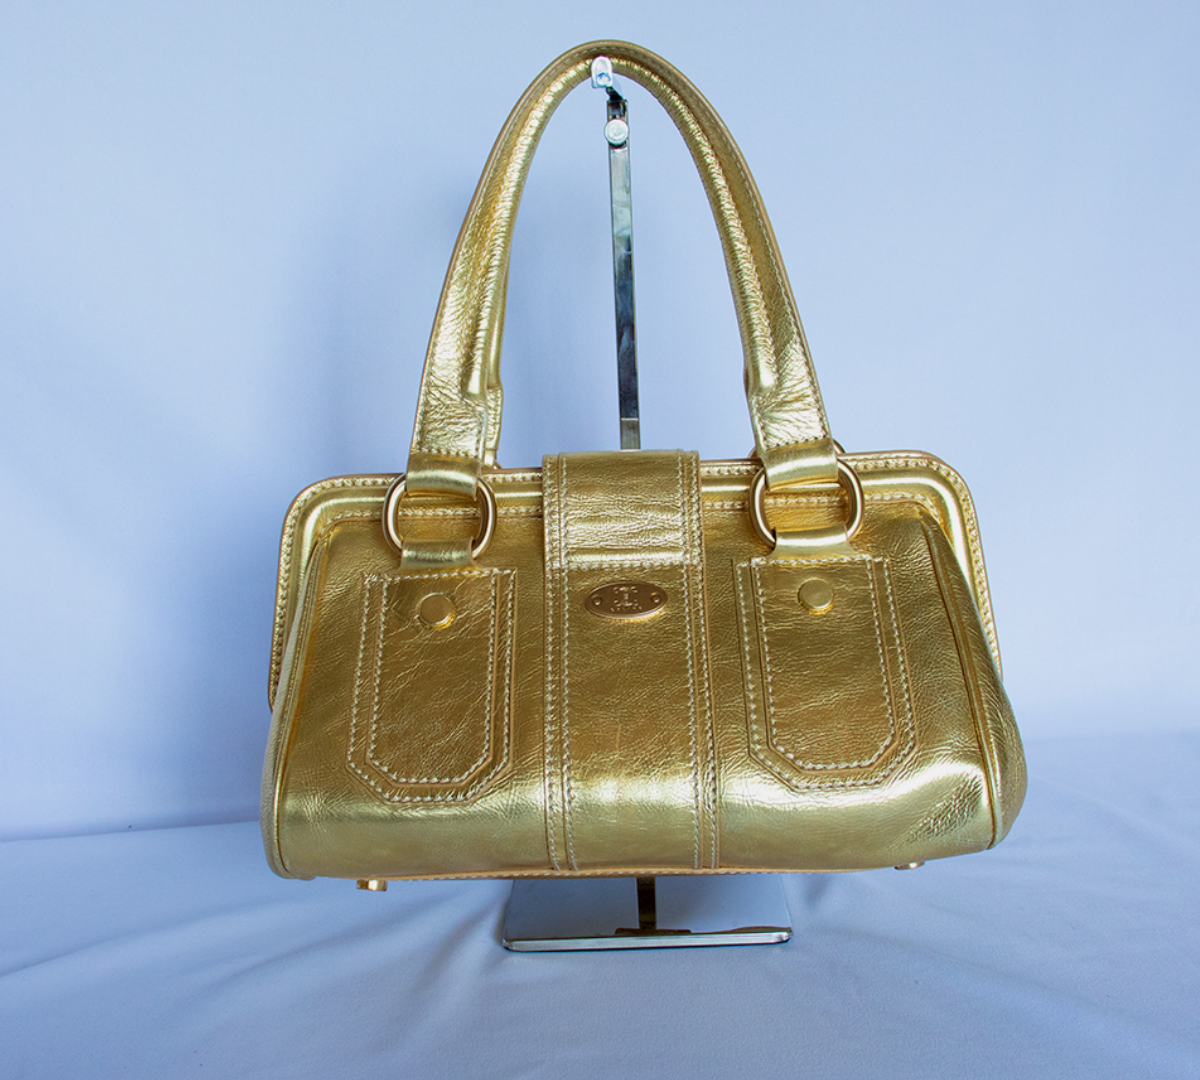 Celine ella gold satchel back_ The Guilty Woman